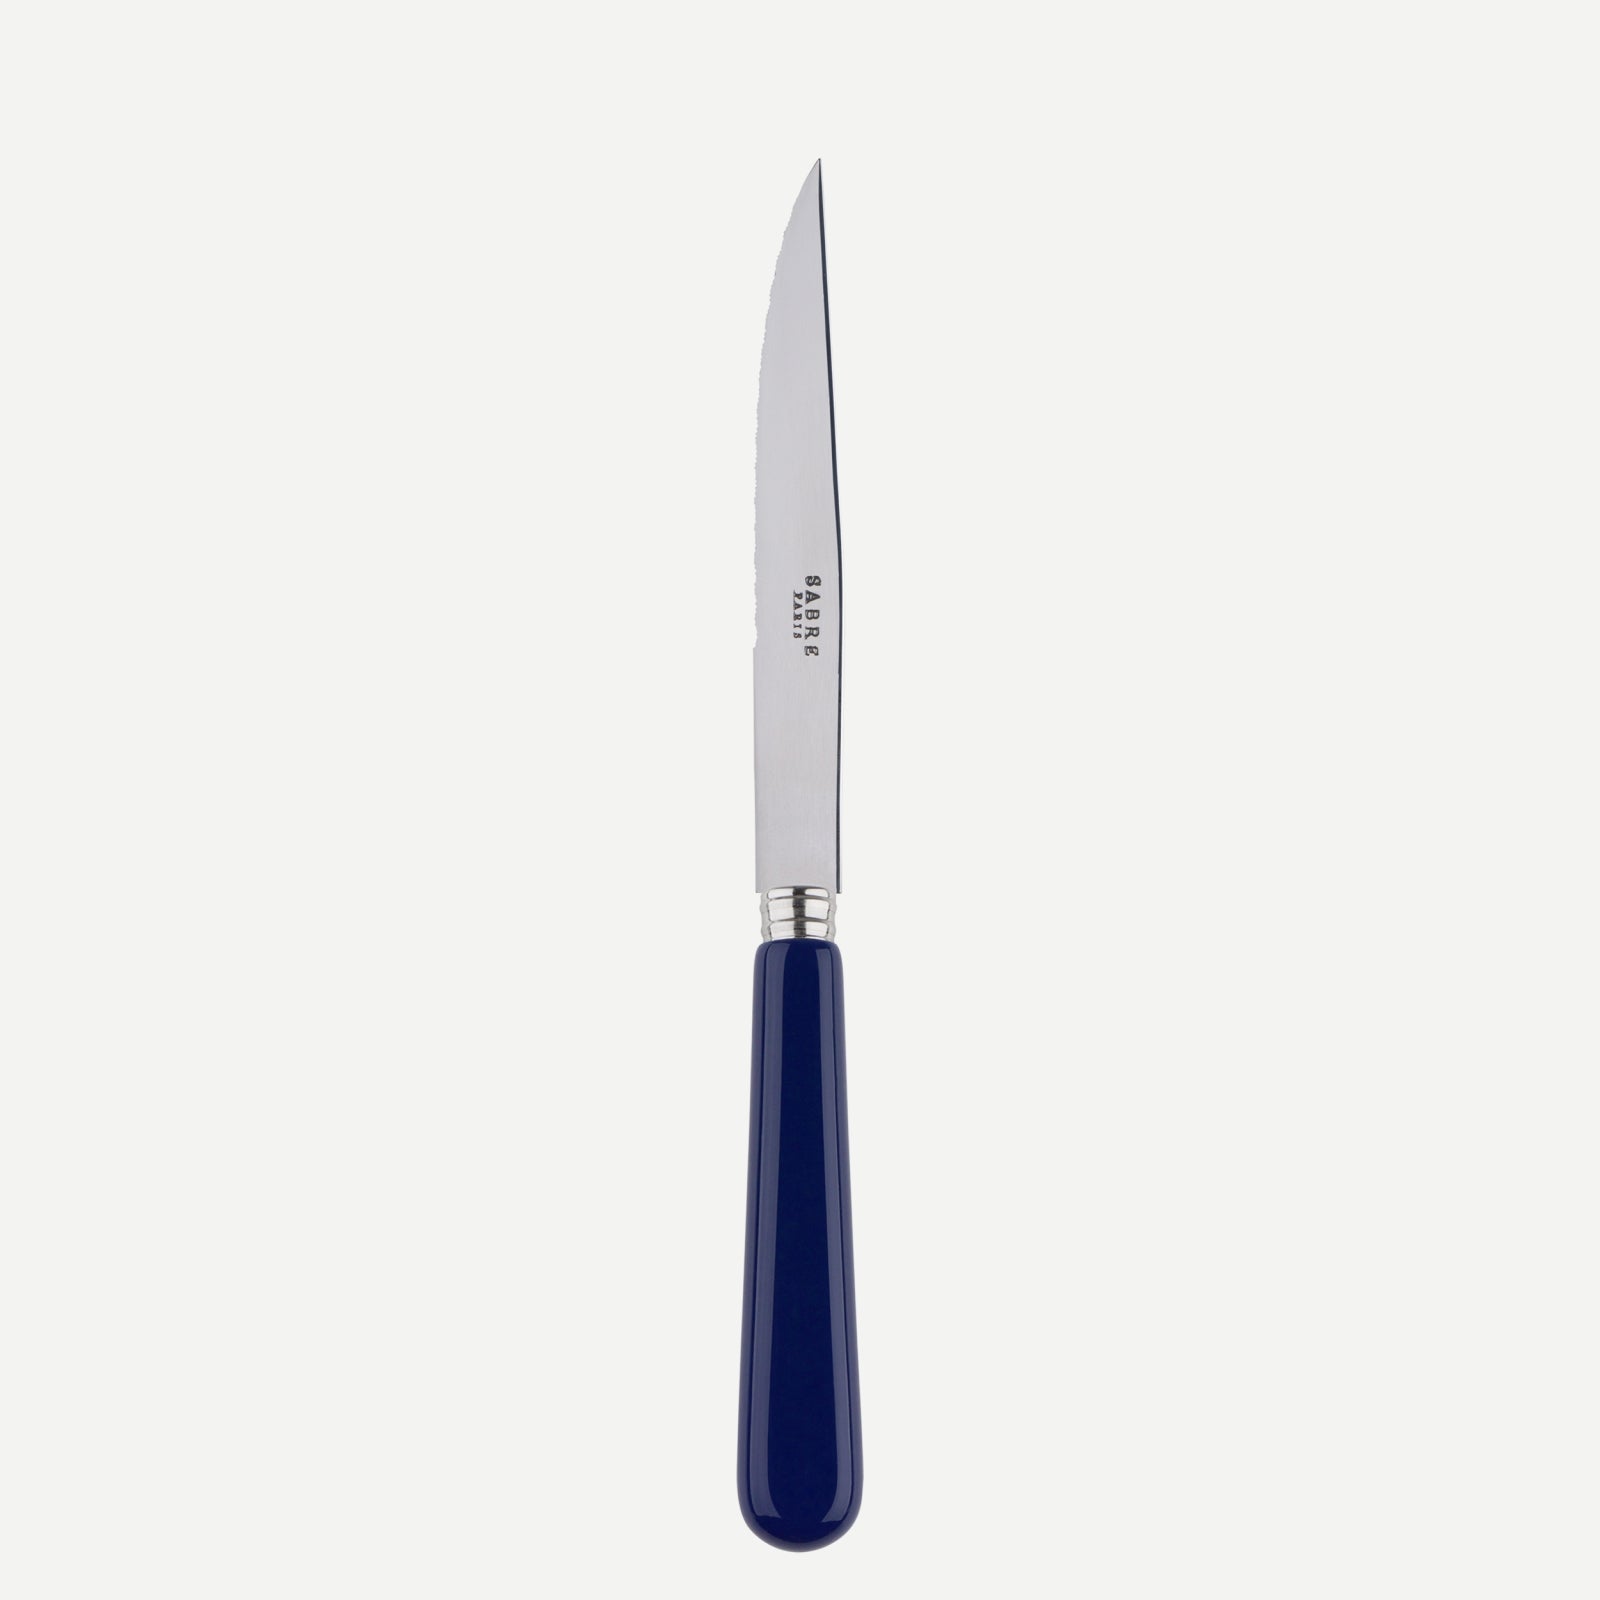 Steack knife - Pop unis - Navy blue